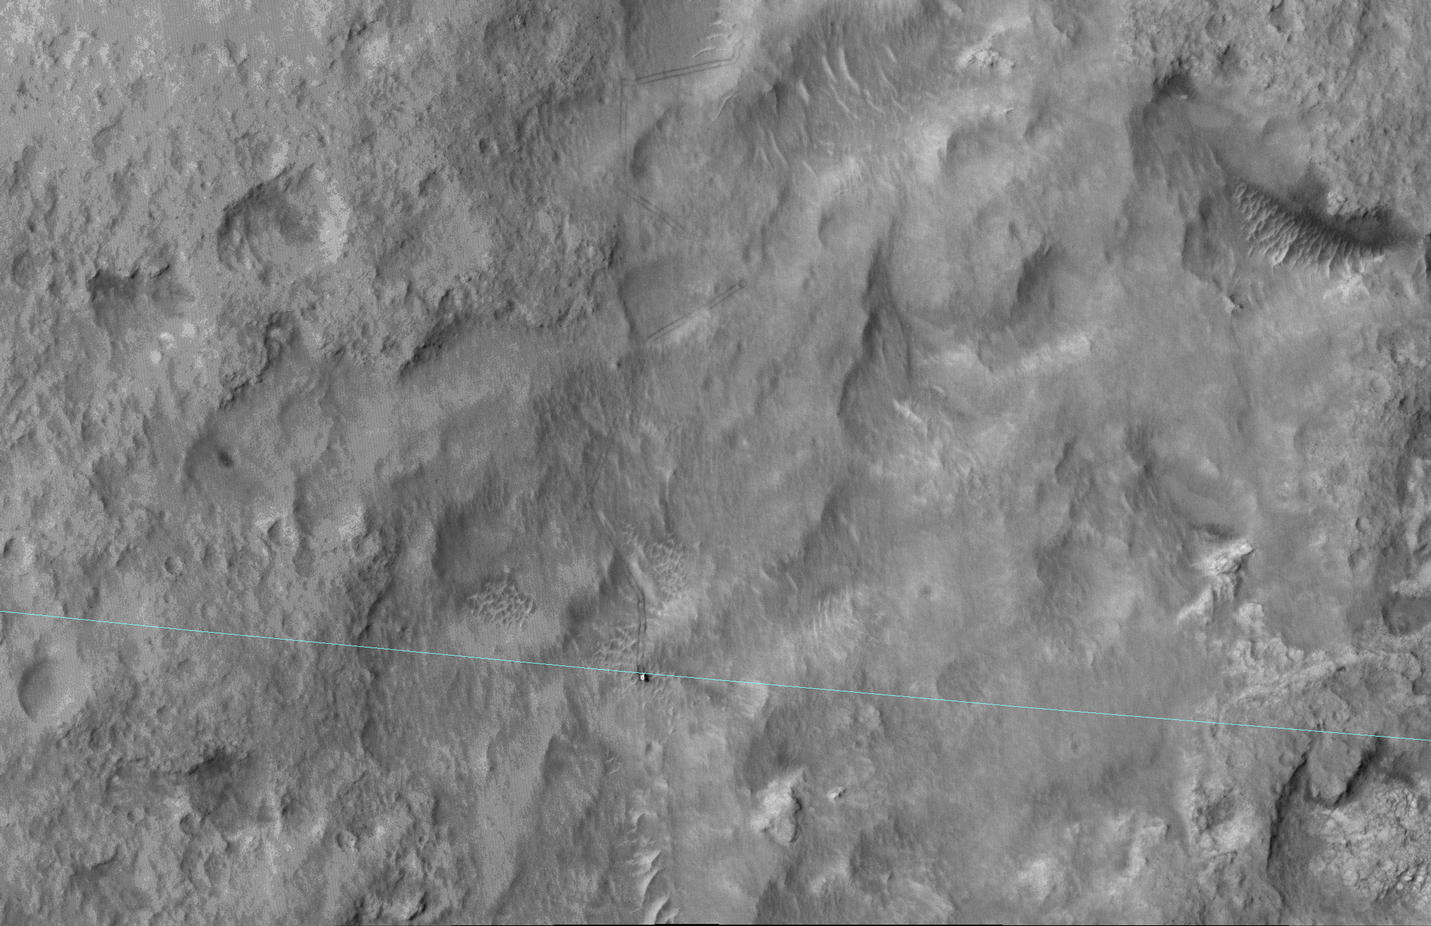 Curiosity Mars Rover Reaching Edge of Its Landing Ellipse